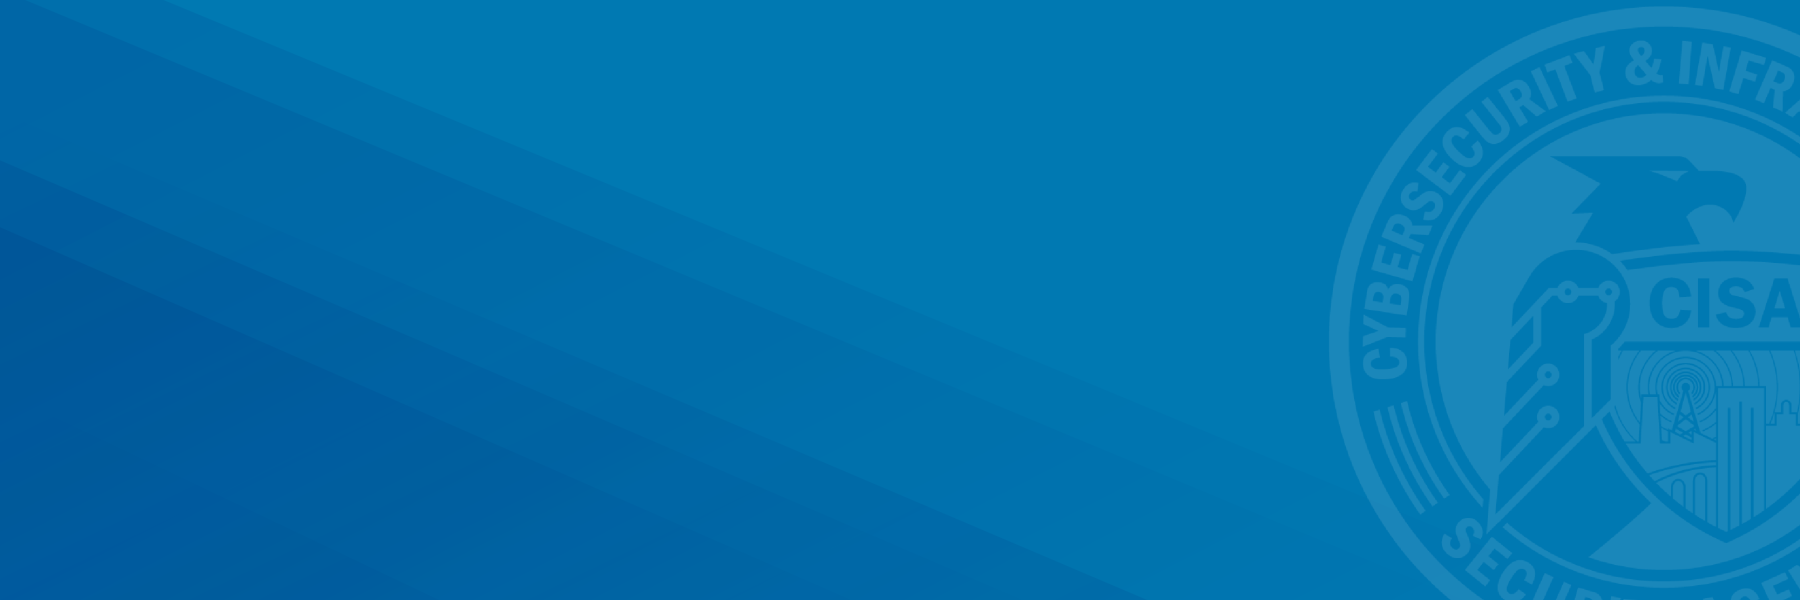 Blue gradient background with white CISA logo